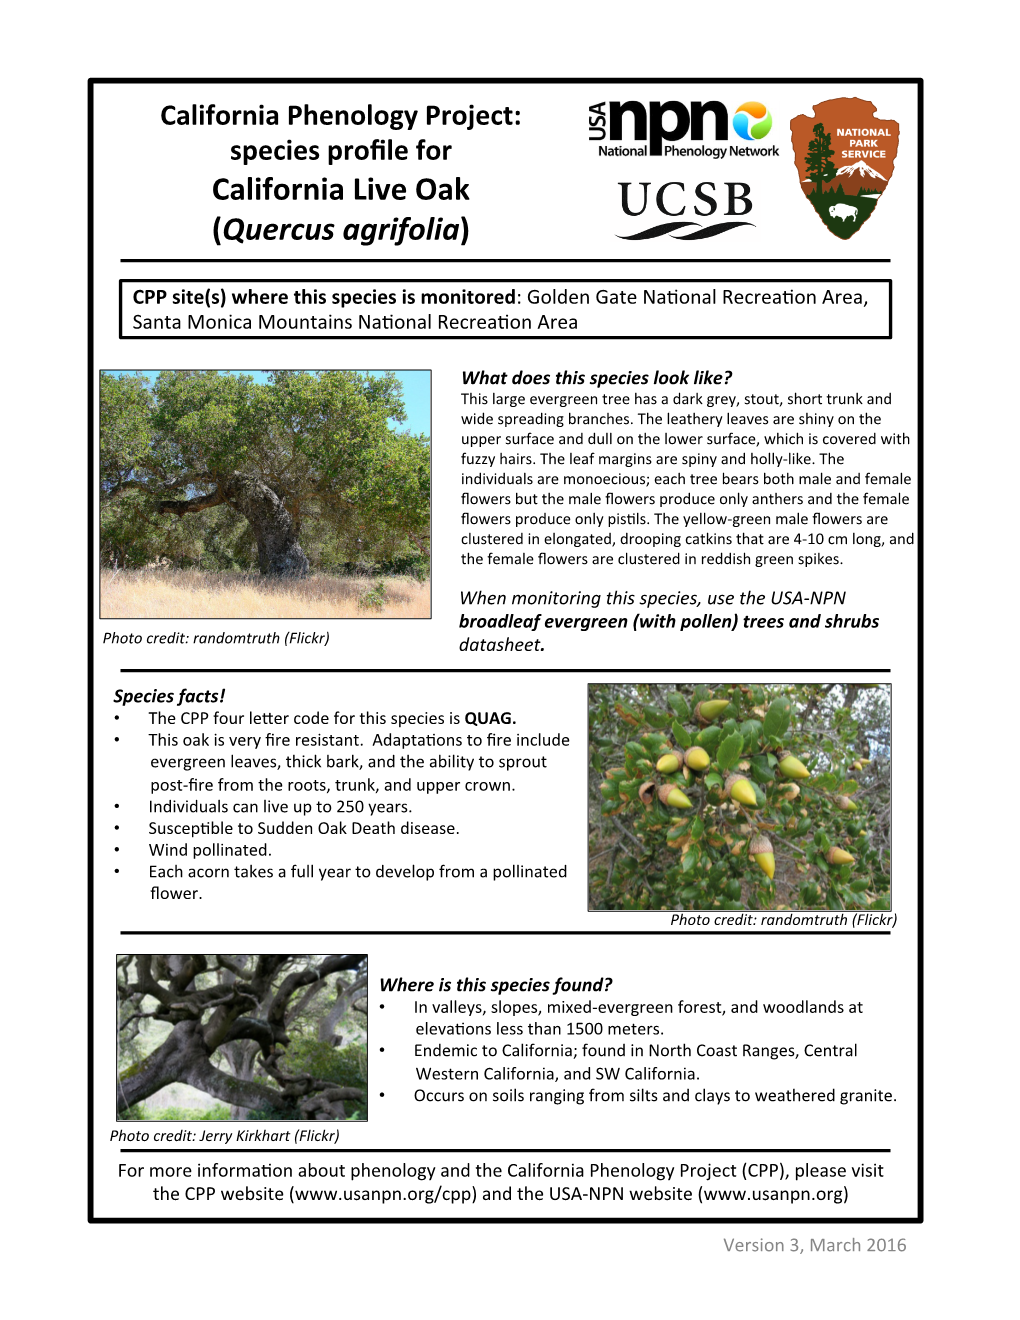 California Live Oak (Quercus Agrifolia)